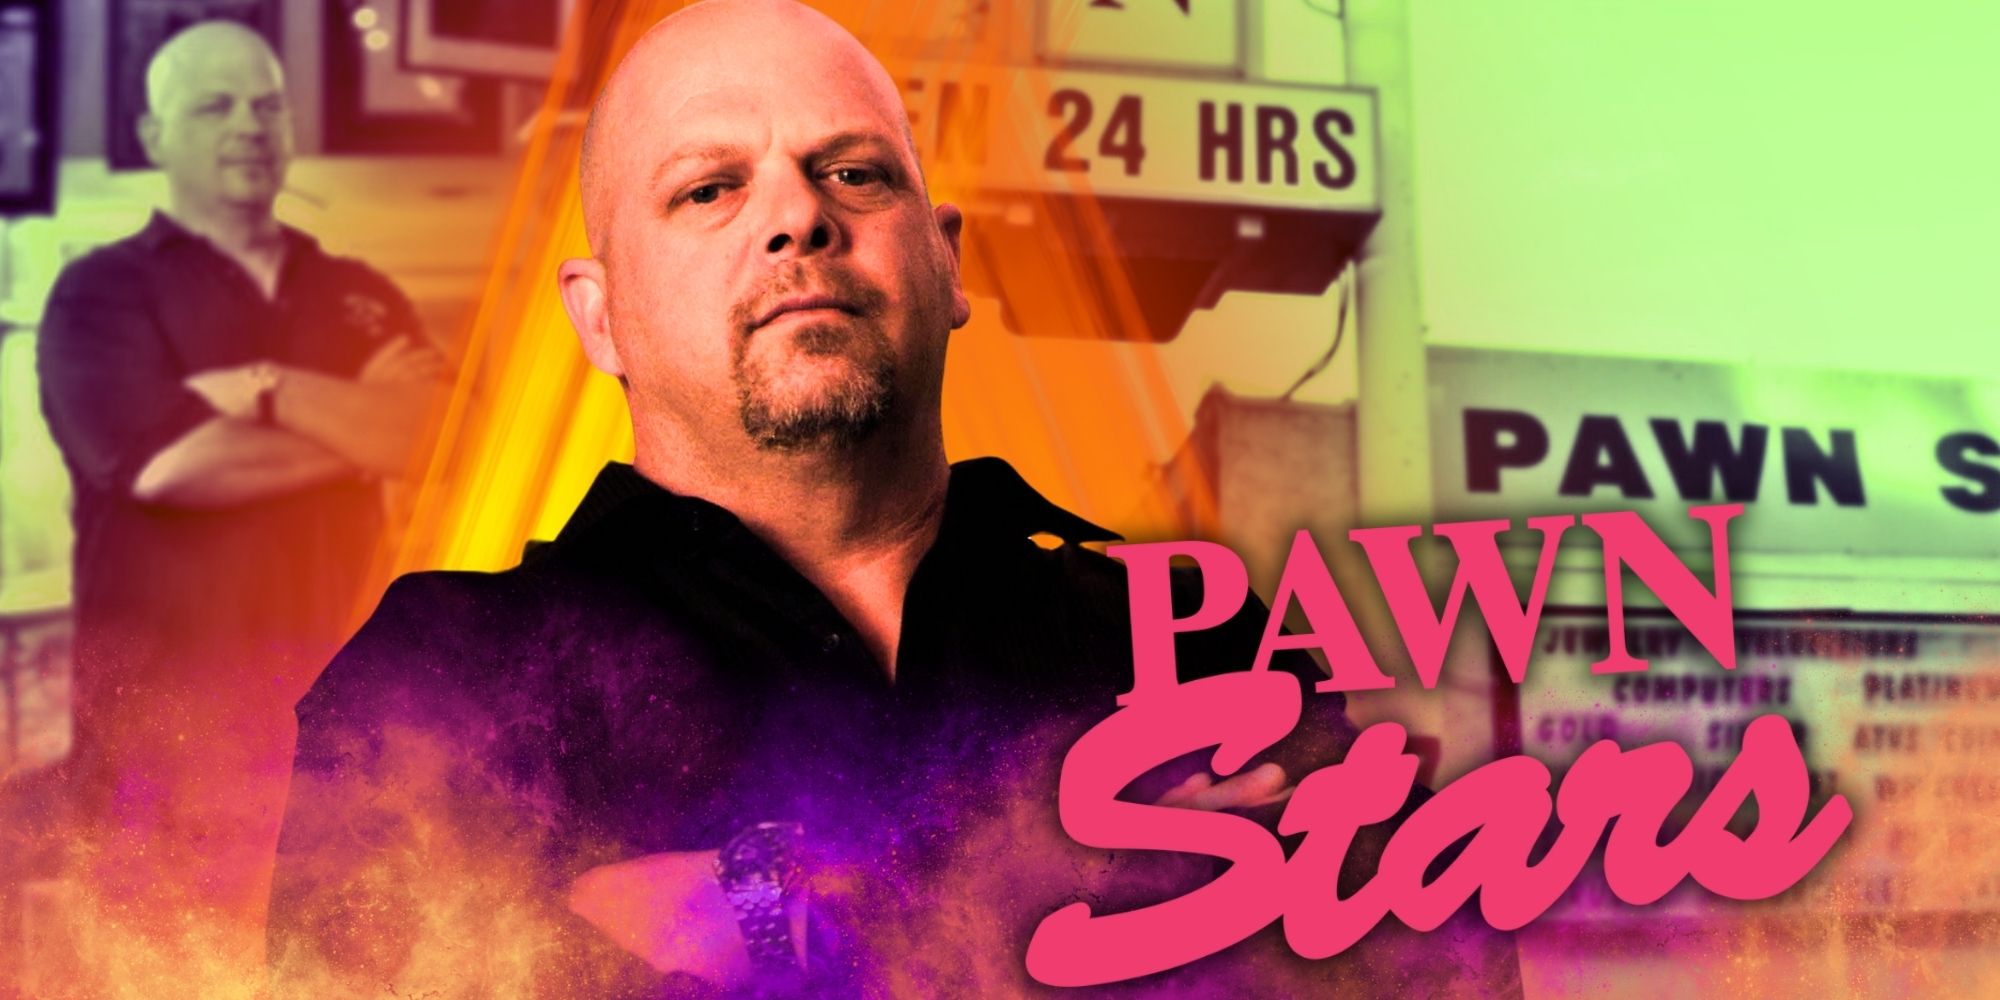  Pawn Stars Season 23 promo